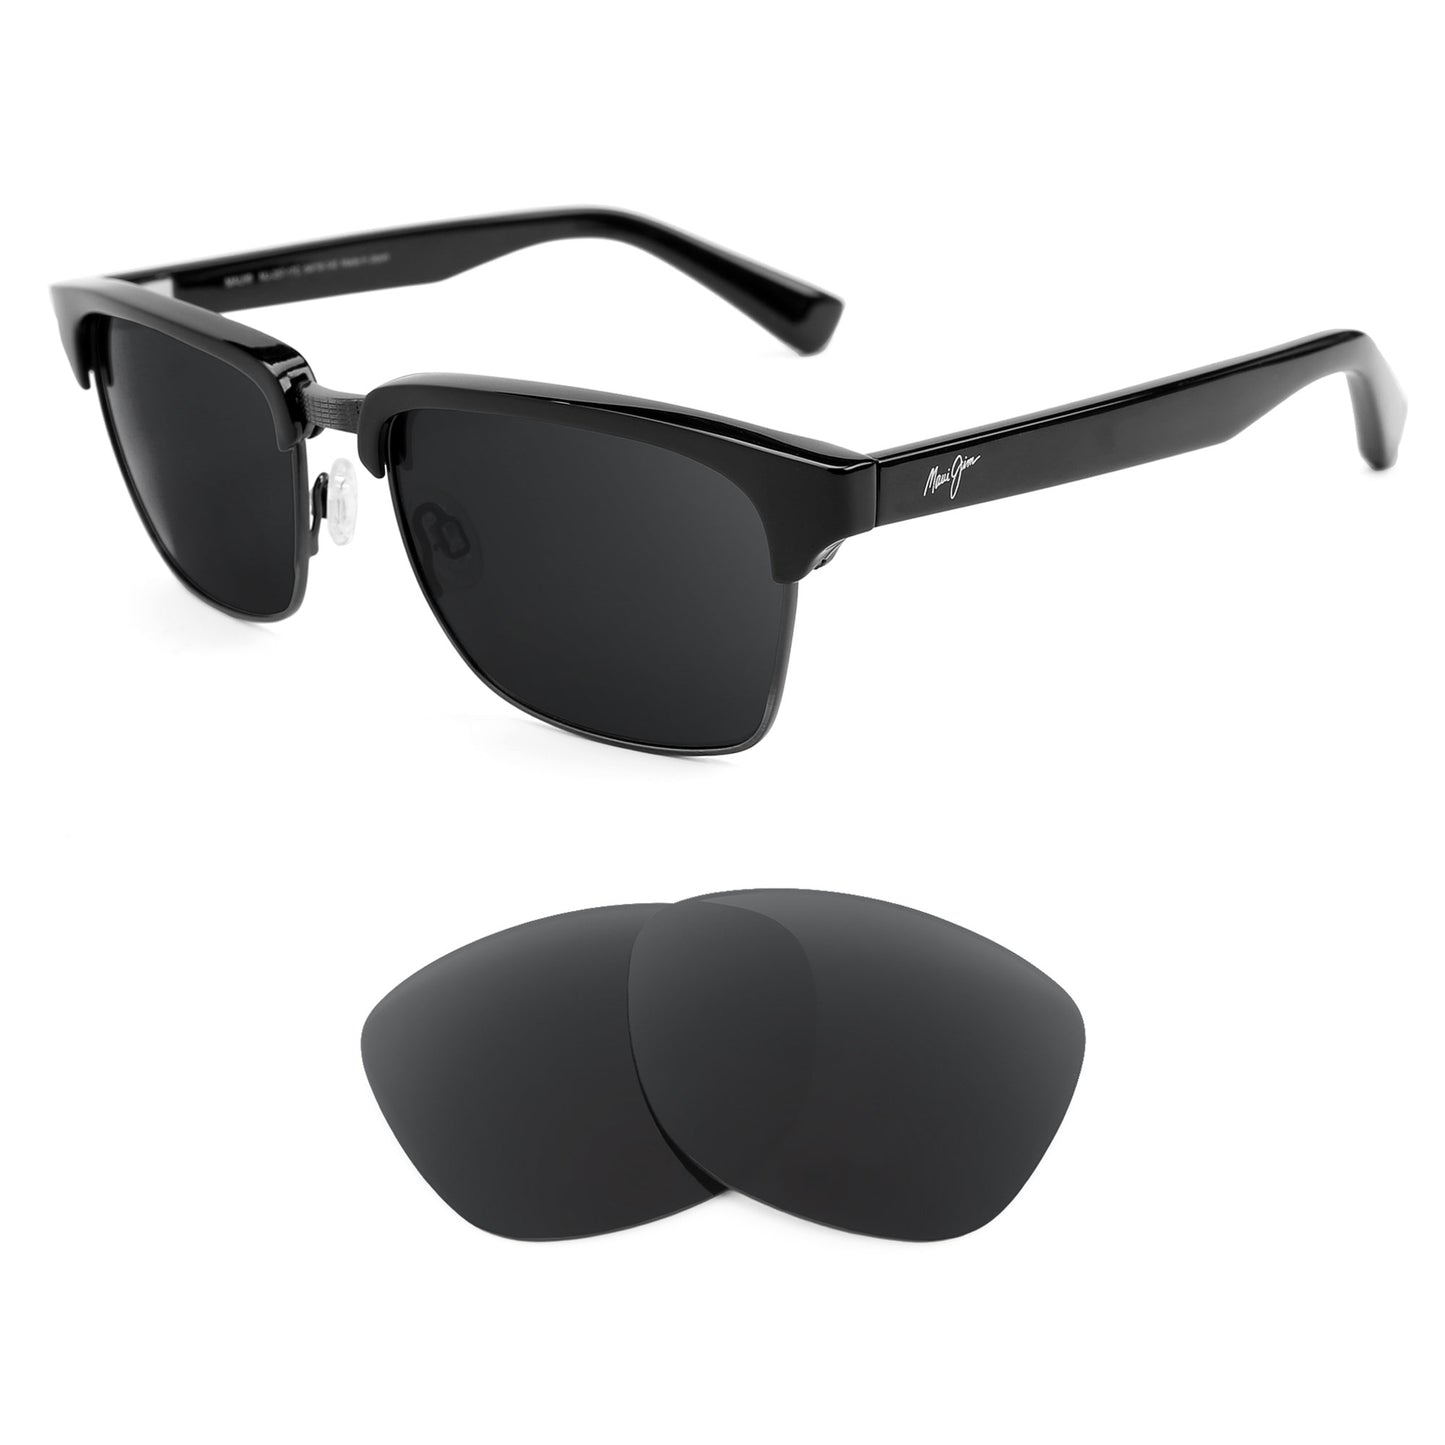 Maui Jim Kawika MJ257 sunglasses with replacement lenses